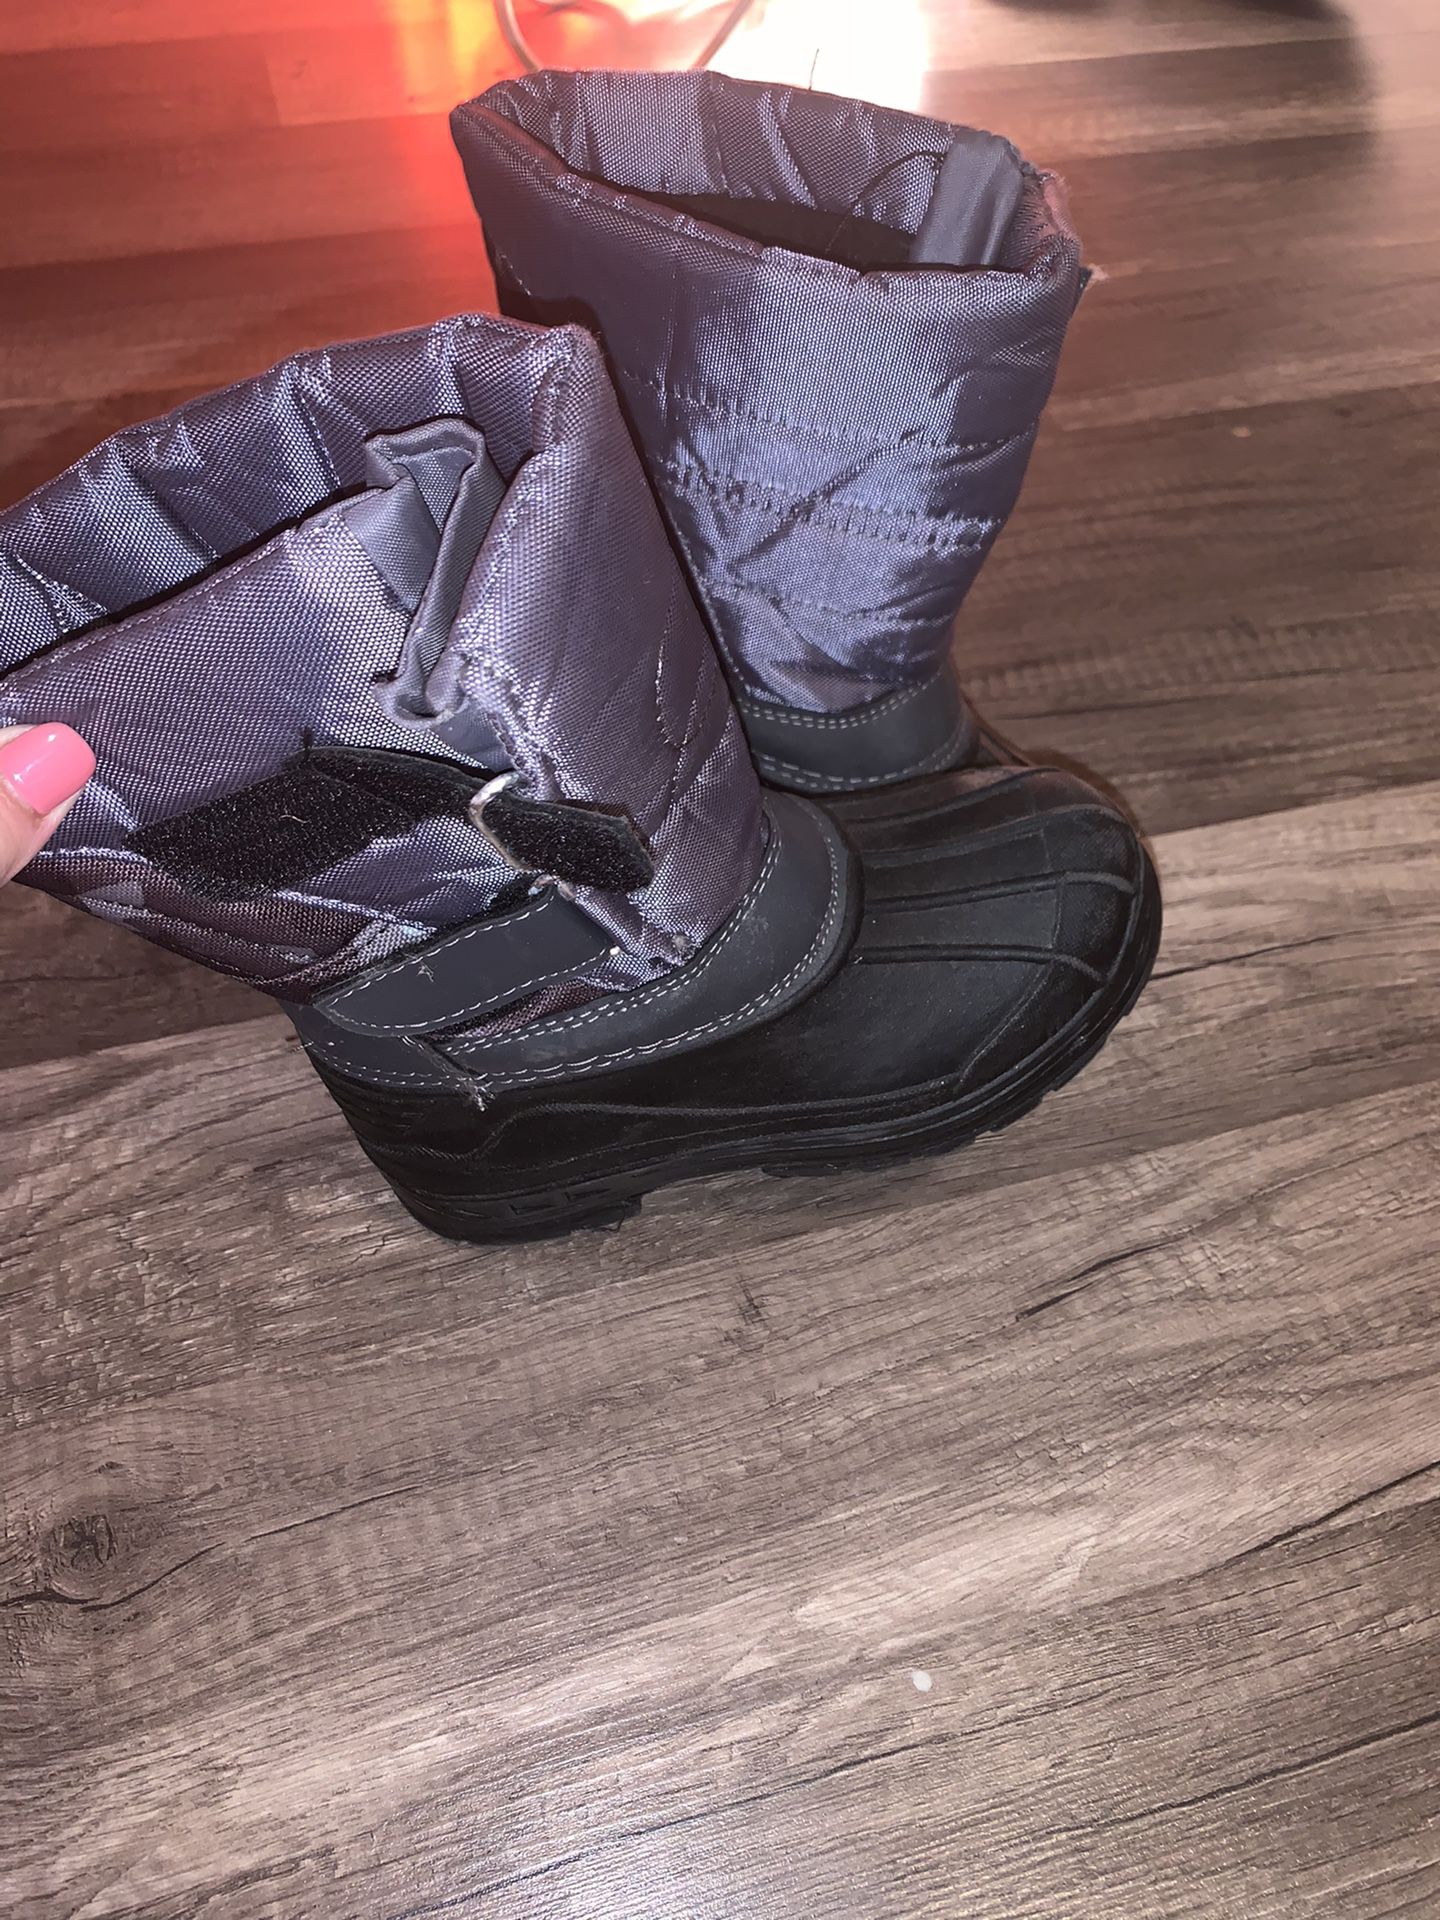 Snow/rain boots size 11